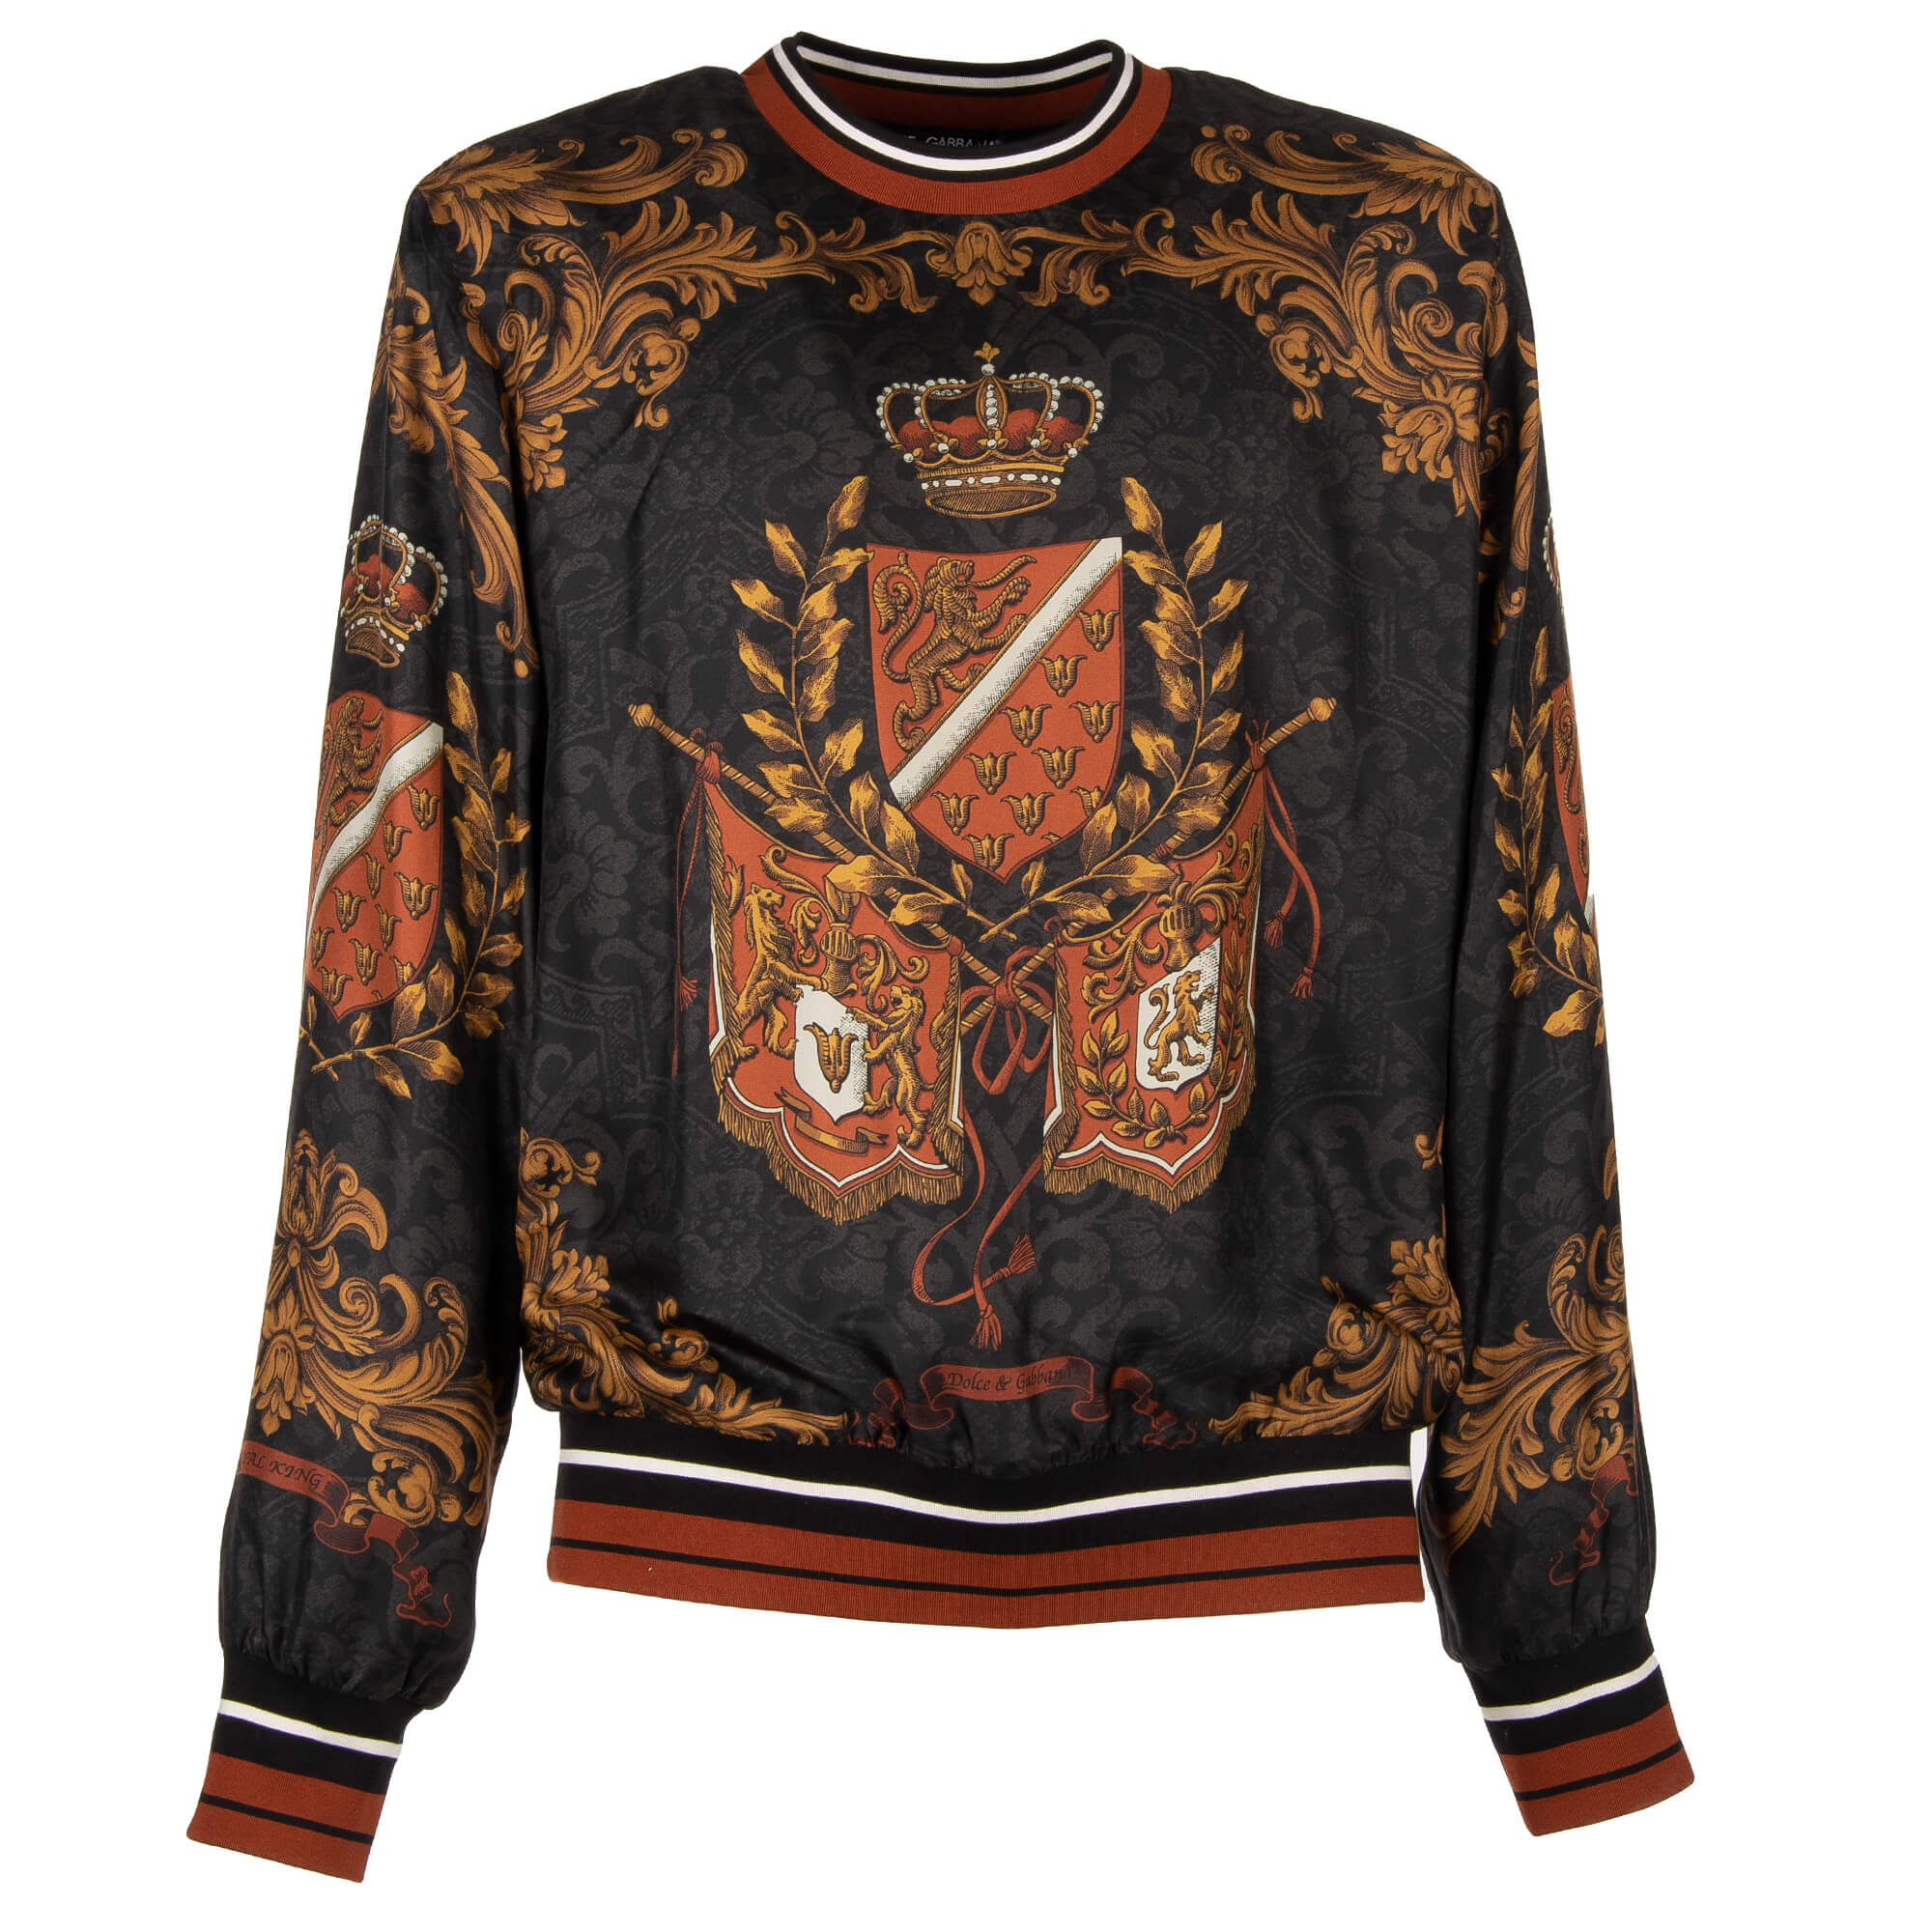 Dolce & Gabbana Crew Neck Sweater with Jacquard Monogram Motif Size S